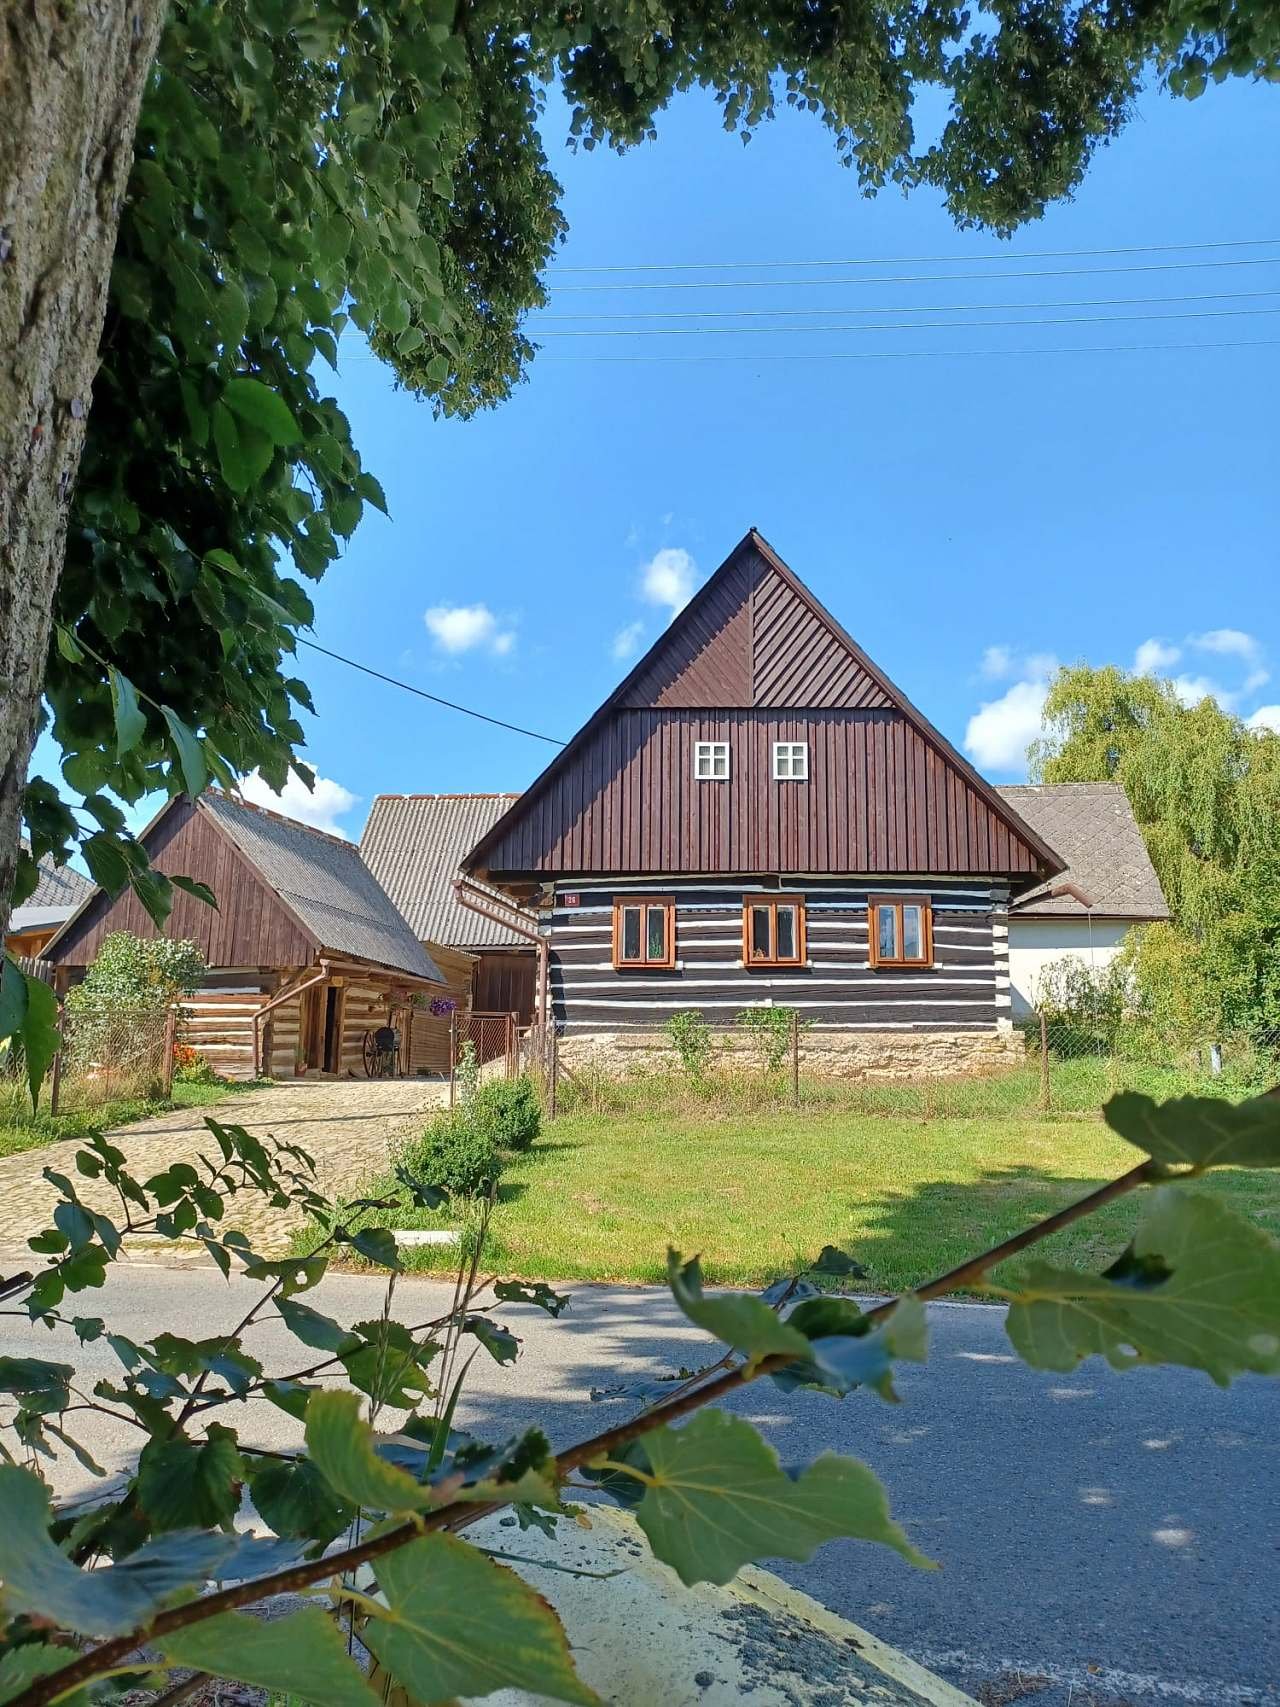 Casa de troncos en alquiler para alojamiento Studnice Všeliby